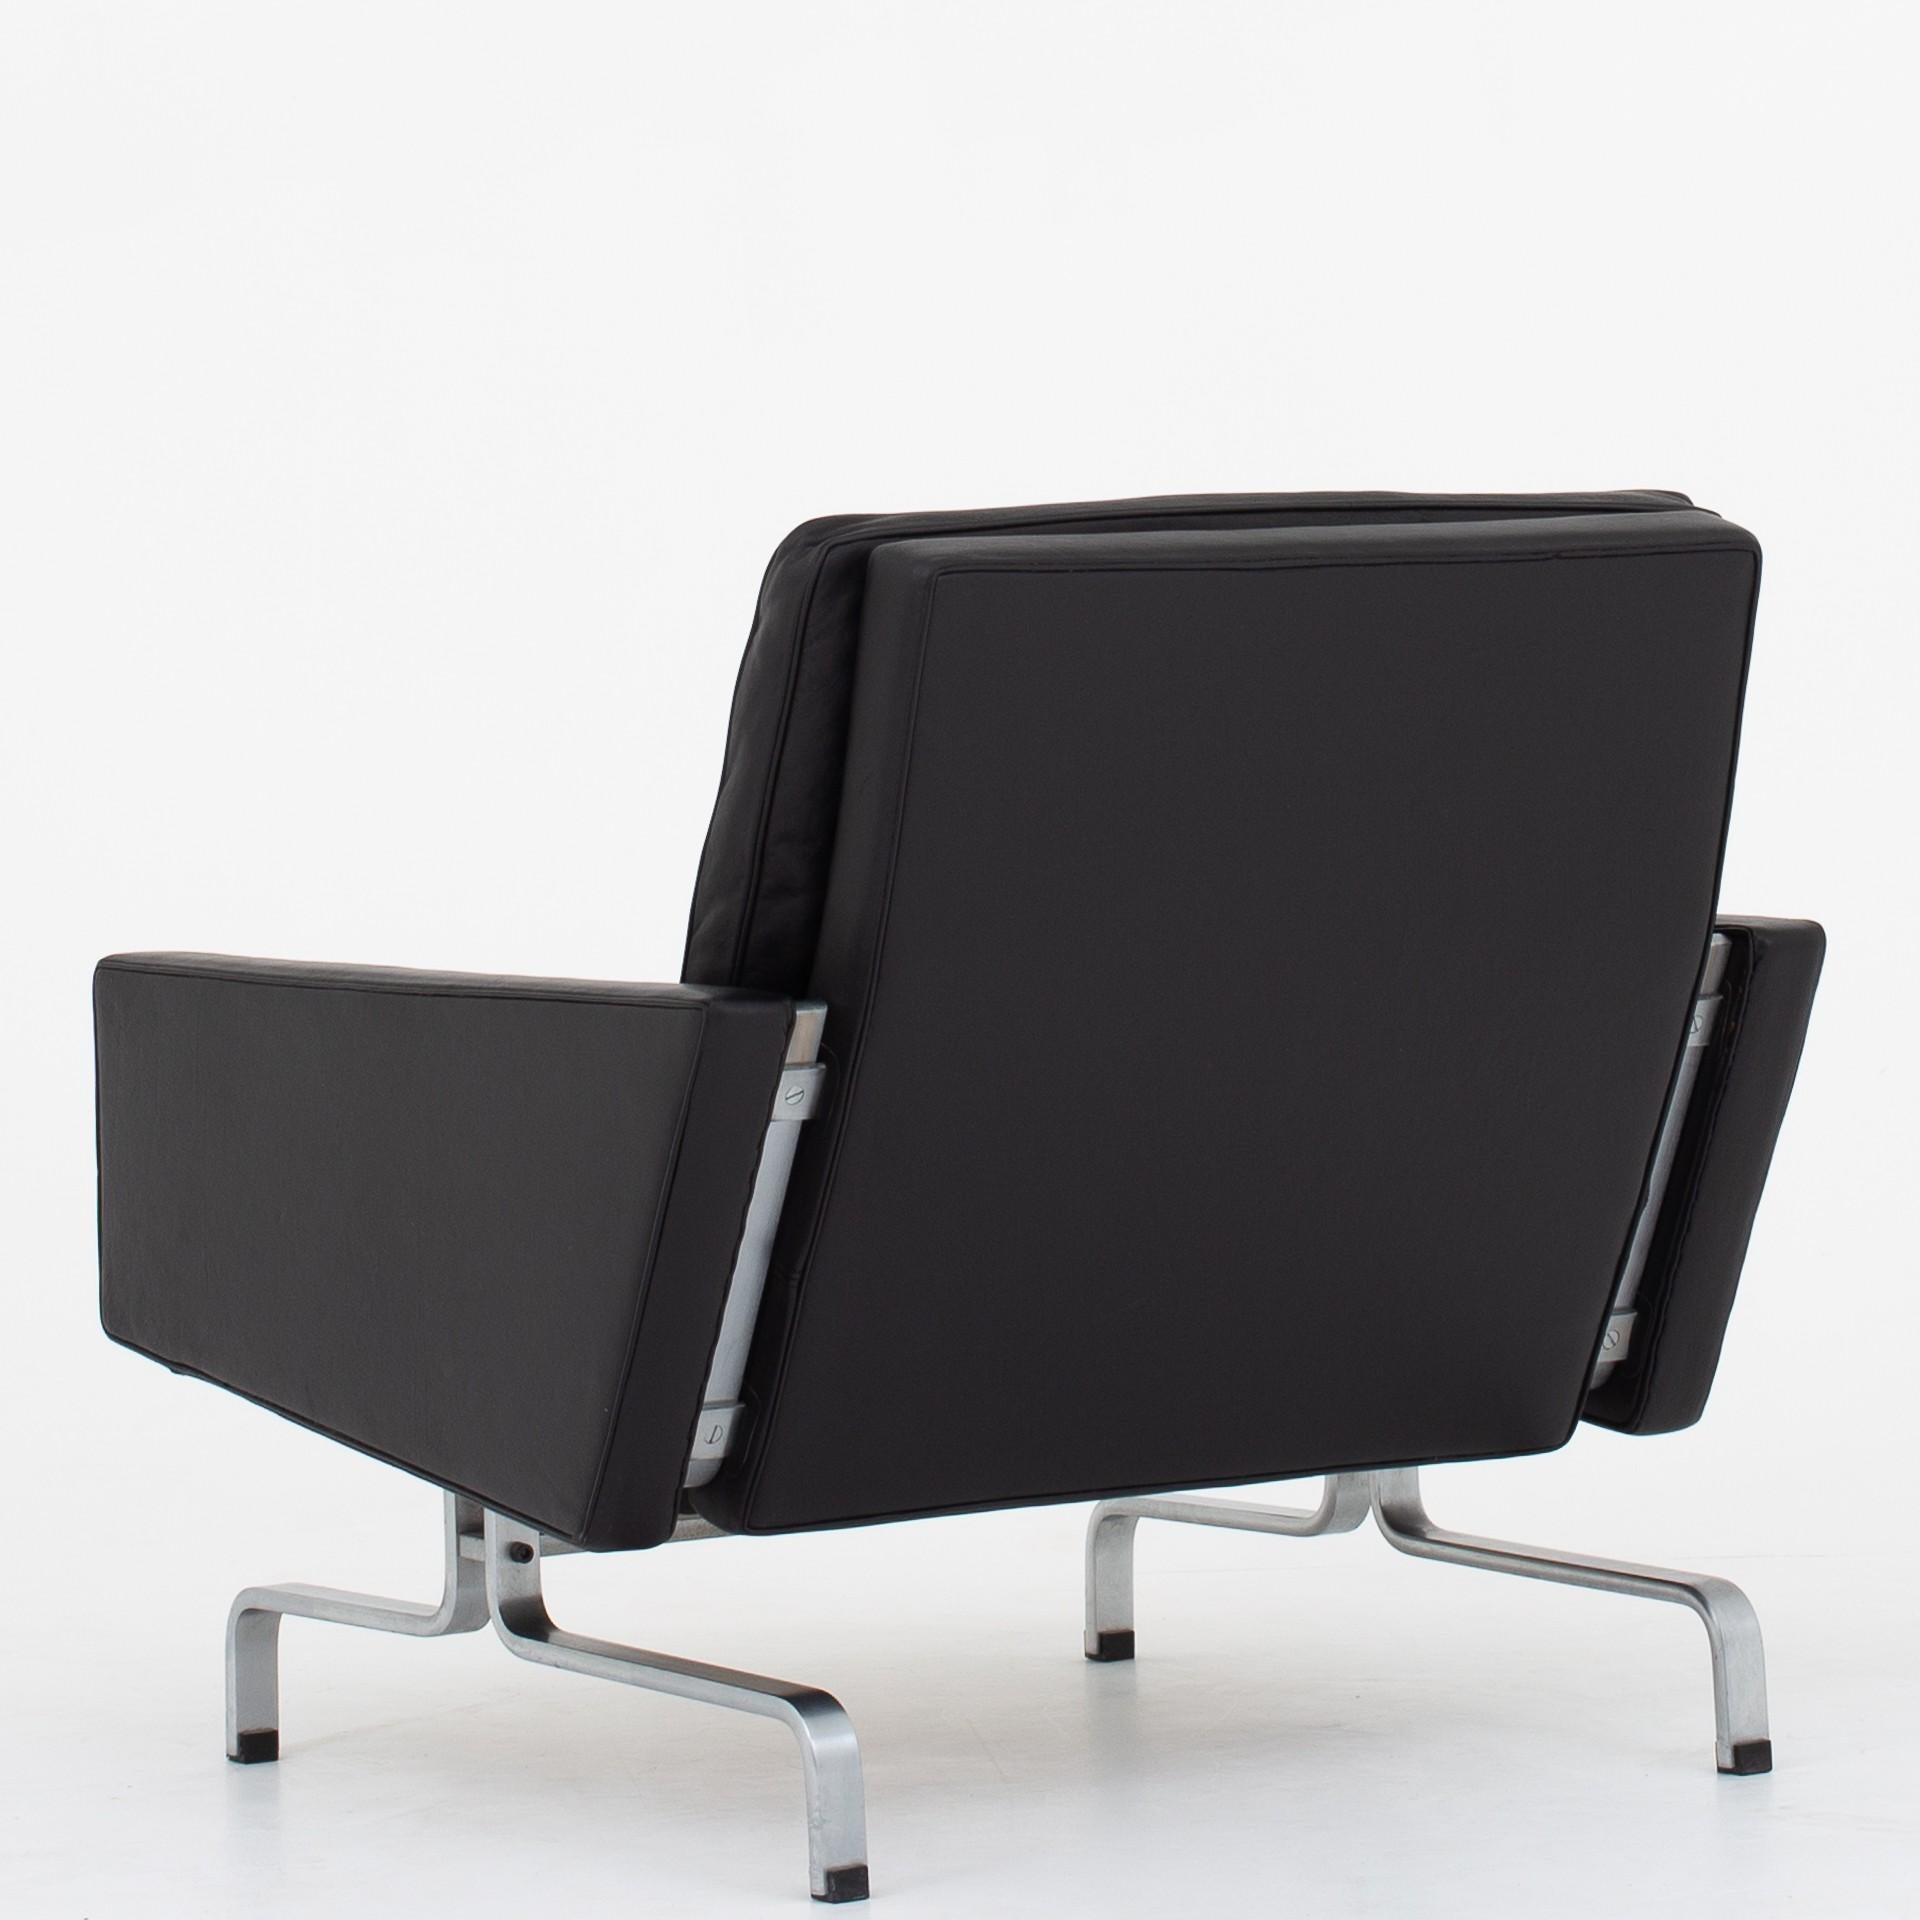 Set of Two Easy Chairs by Poul Kjærholm (Skandinavische Moderne)